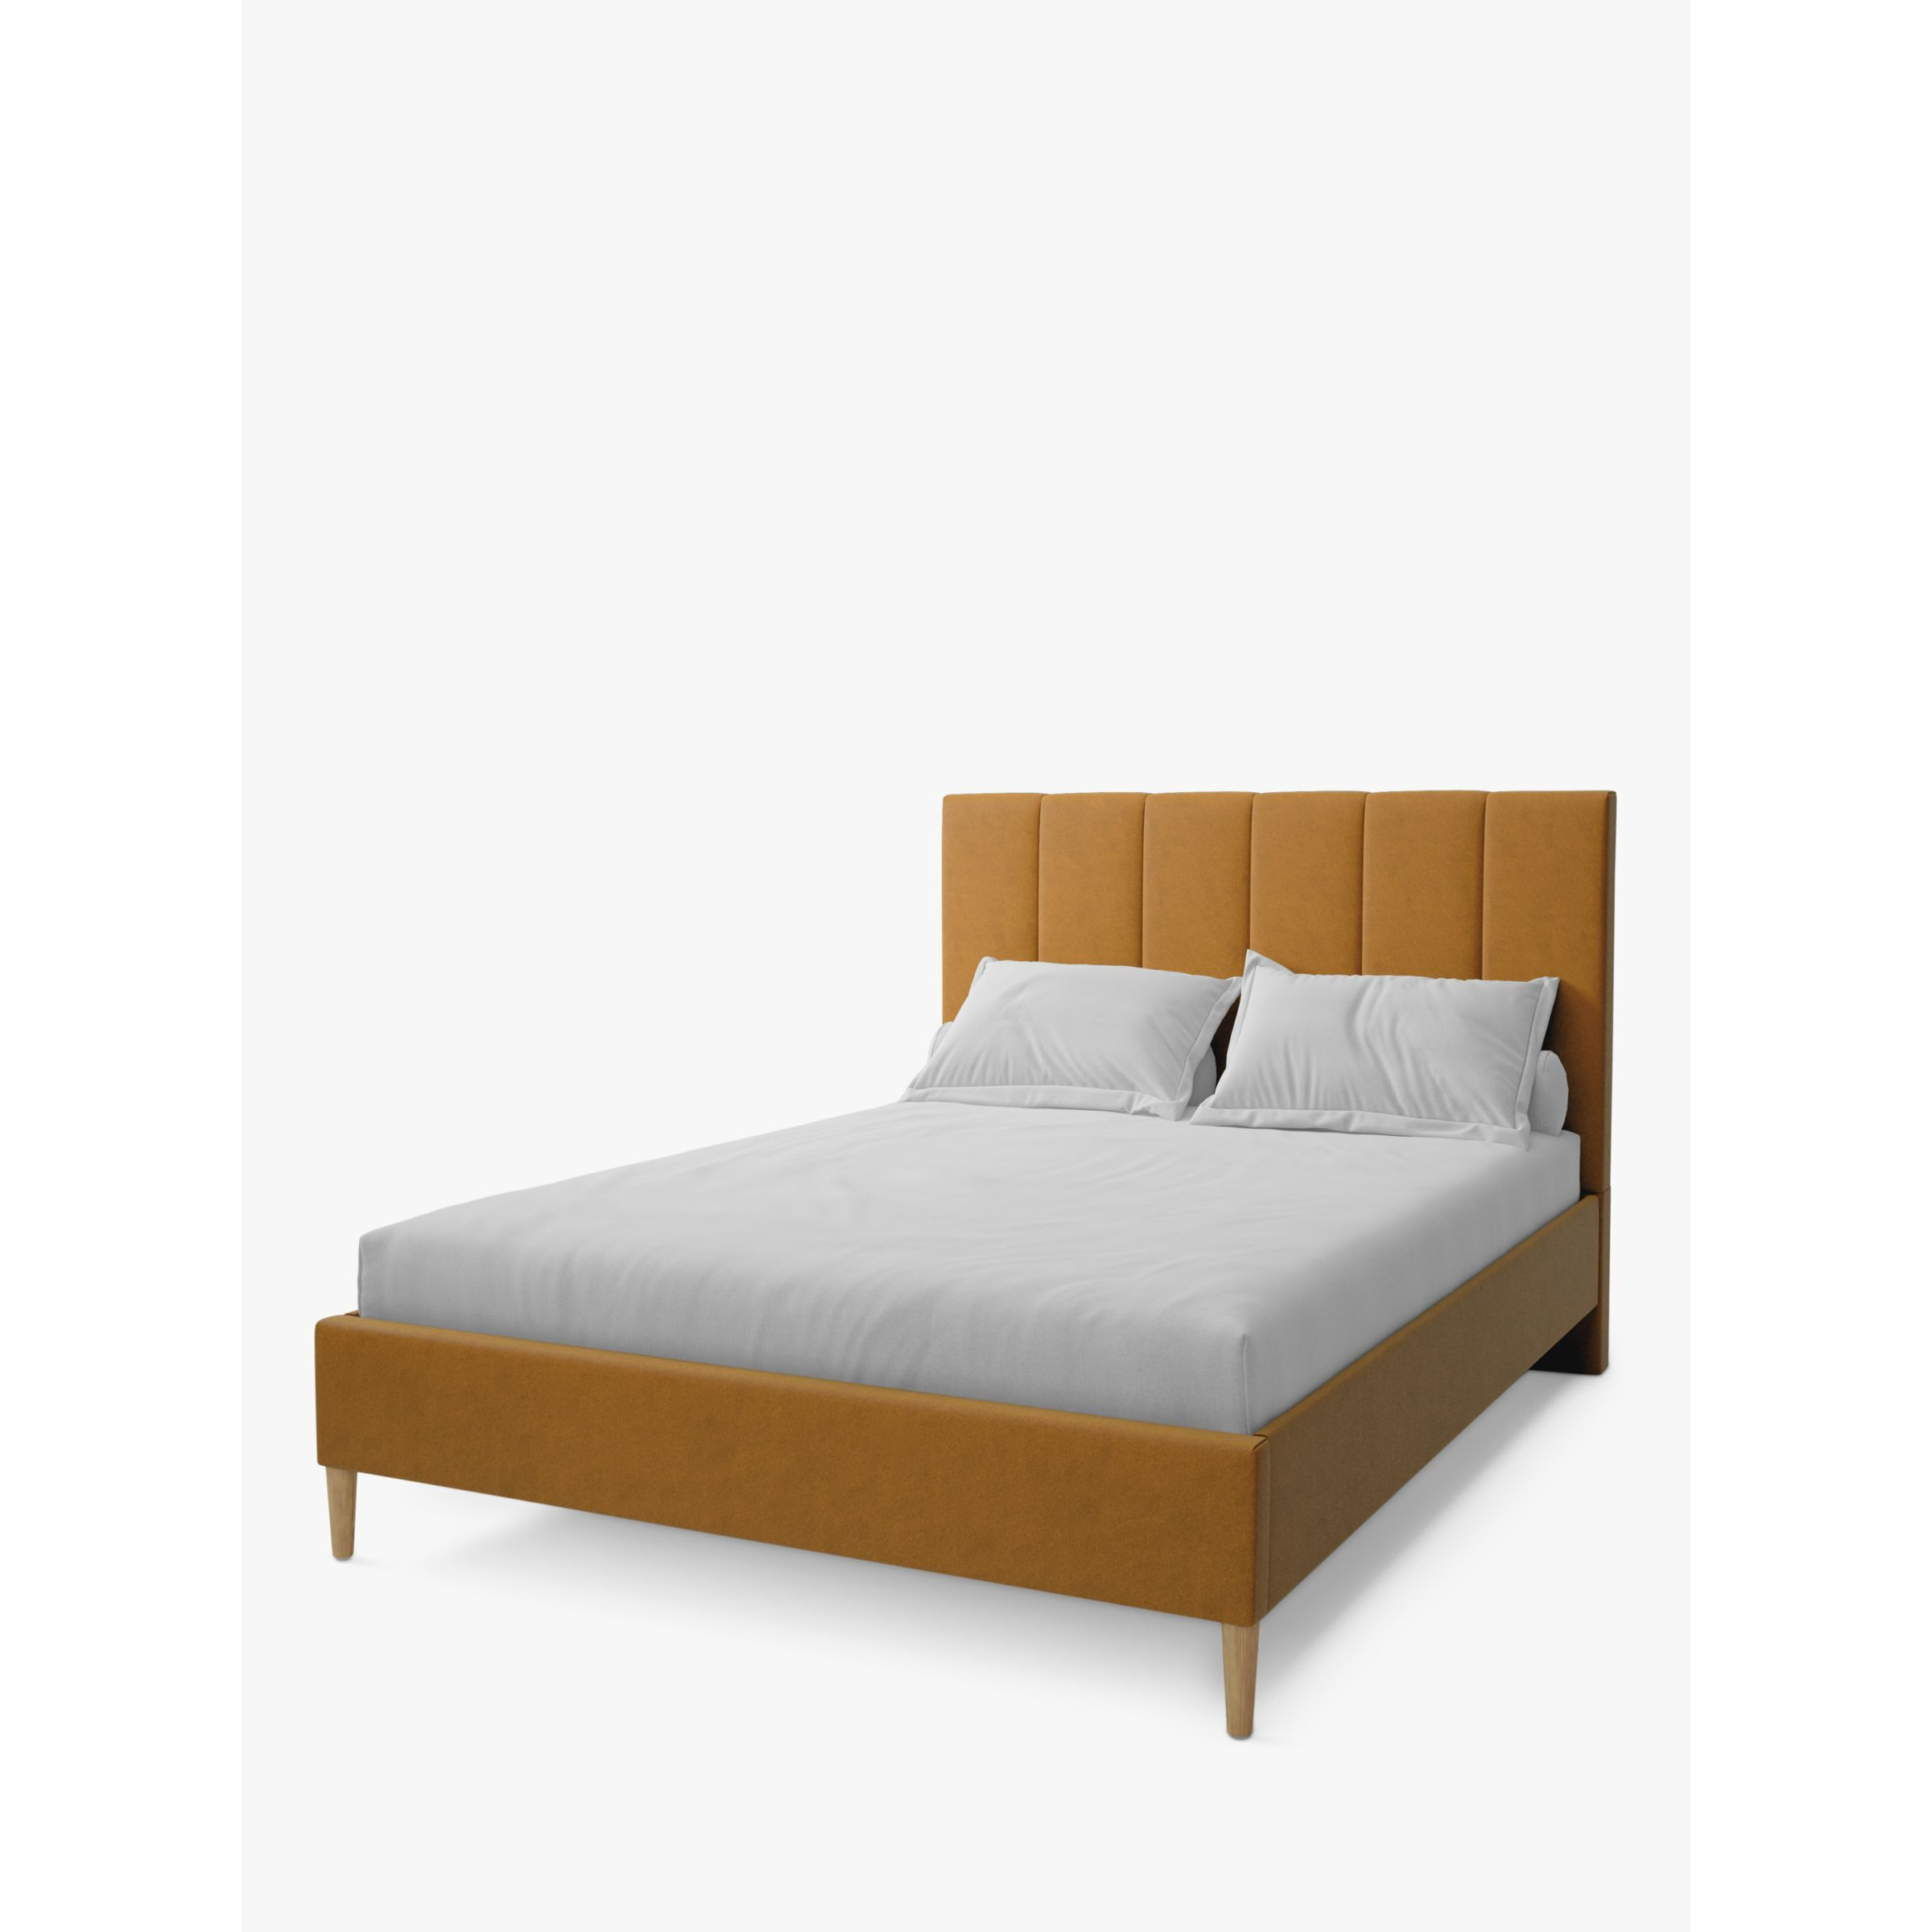 Koti Home Avon Upholstered Bed Frame, Super King Size - image 1